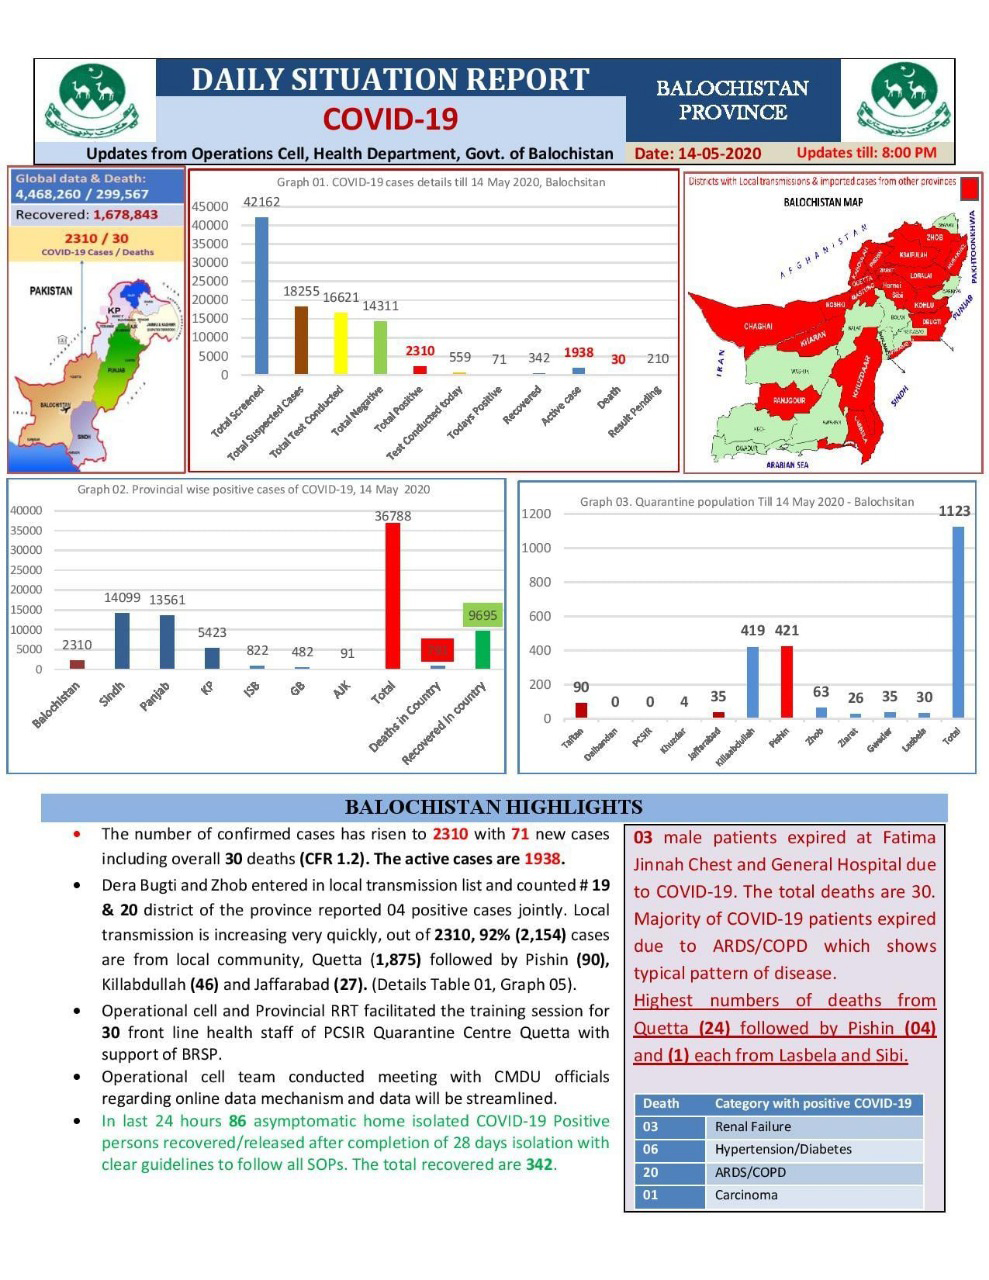 Coronavirus updates, May 14: Latest news on the COVID-19 pandemic from Pakistan and around the world